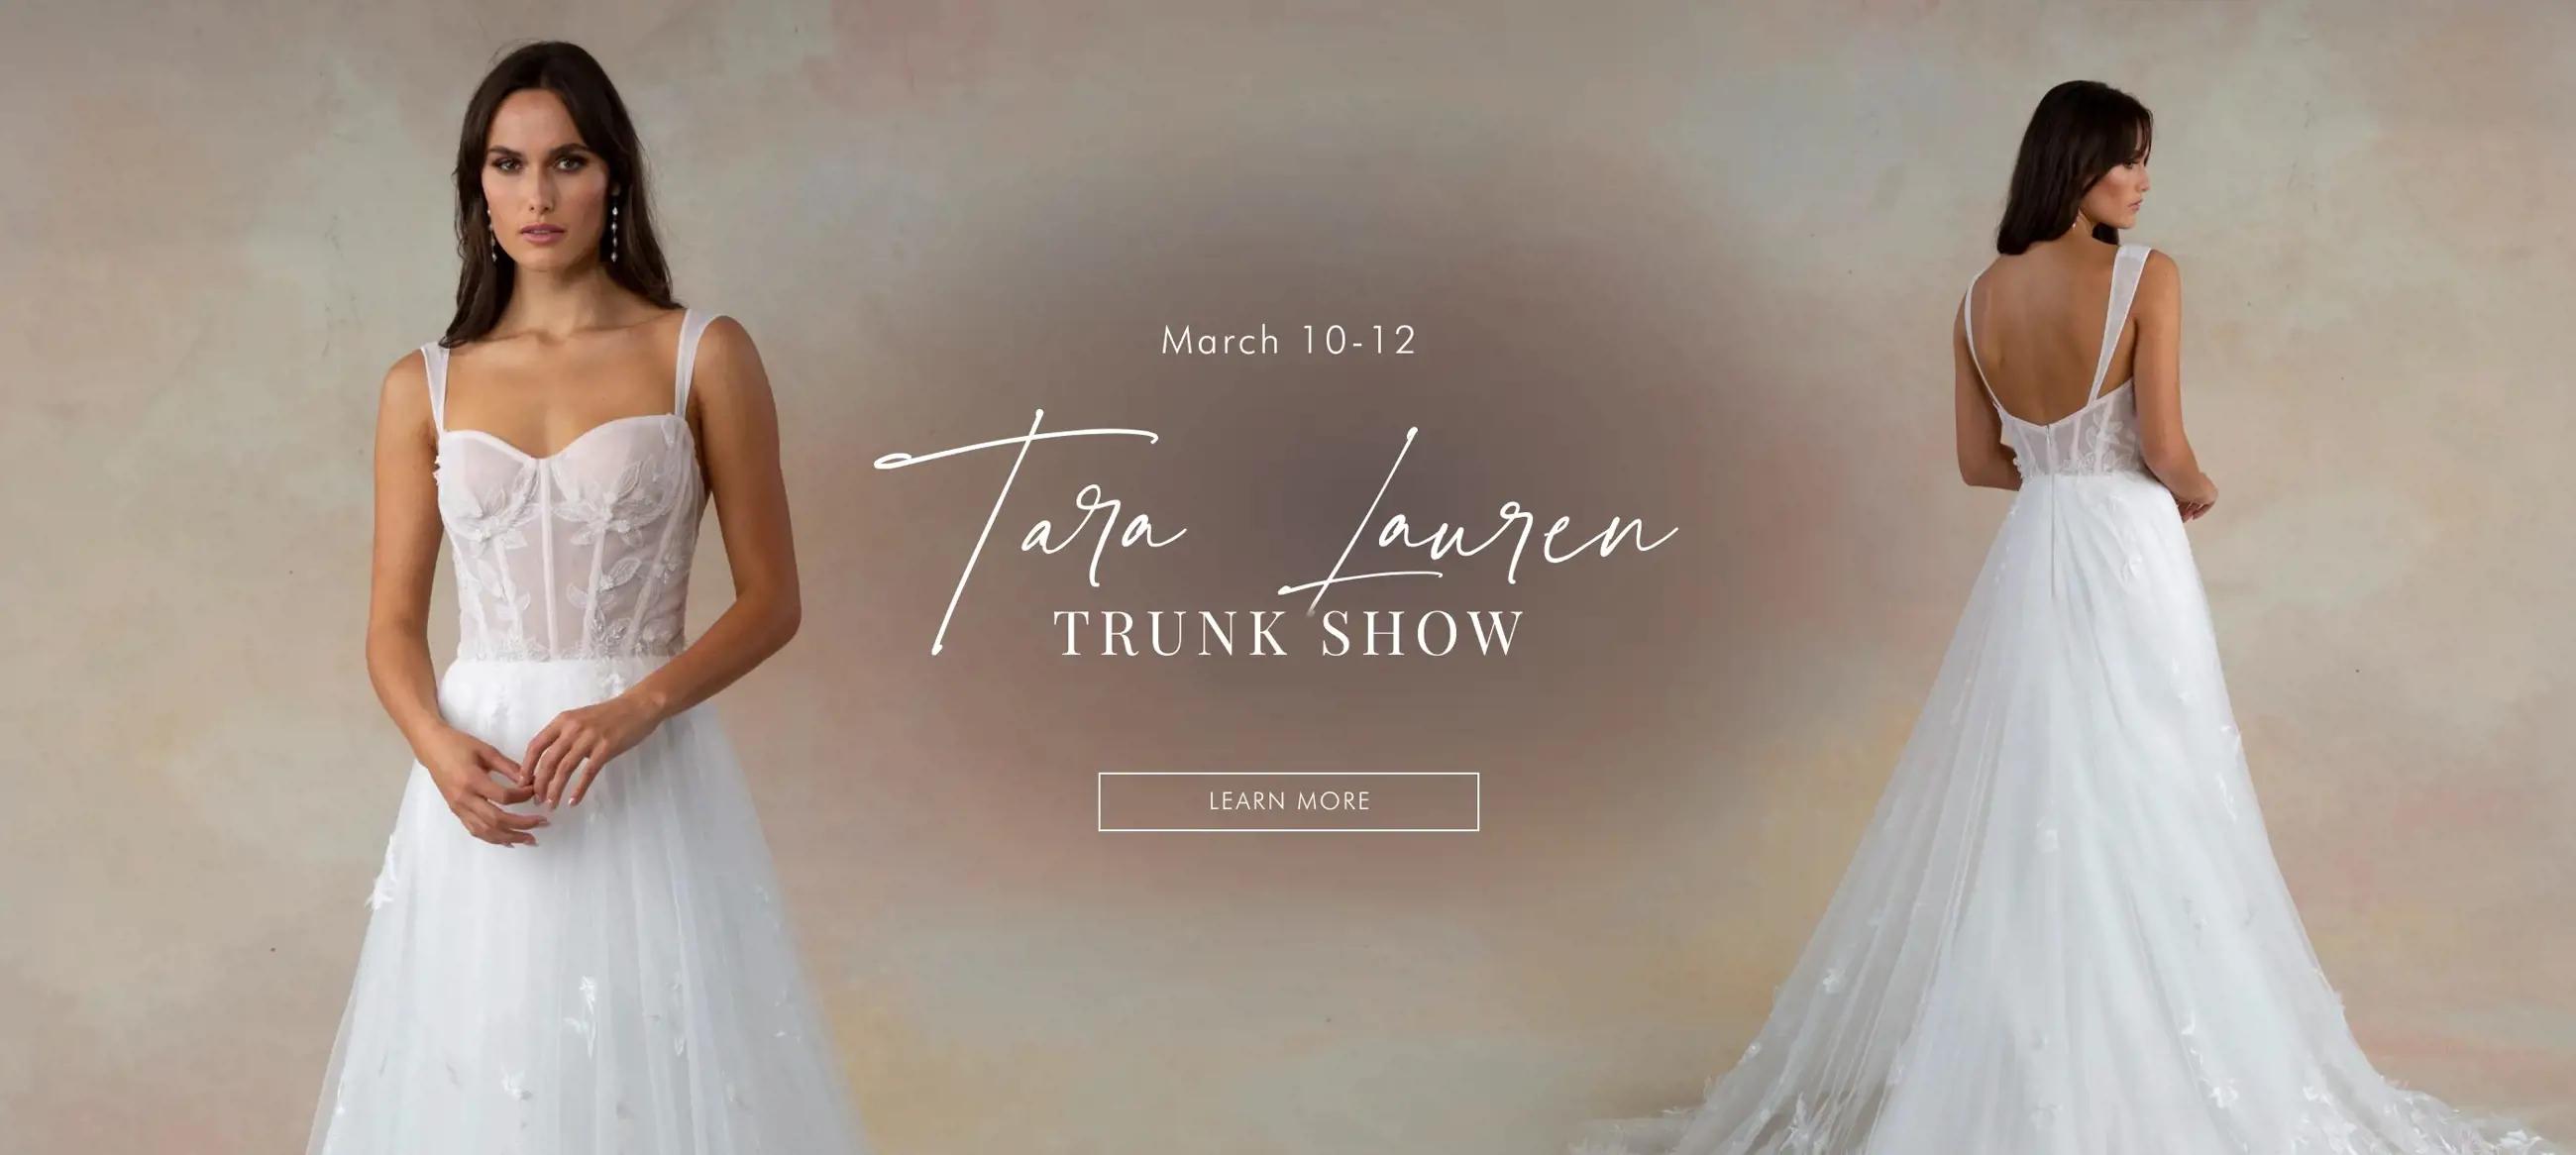 "Tara Lauren Trunk Show" banner for desktop